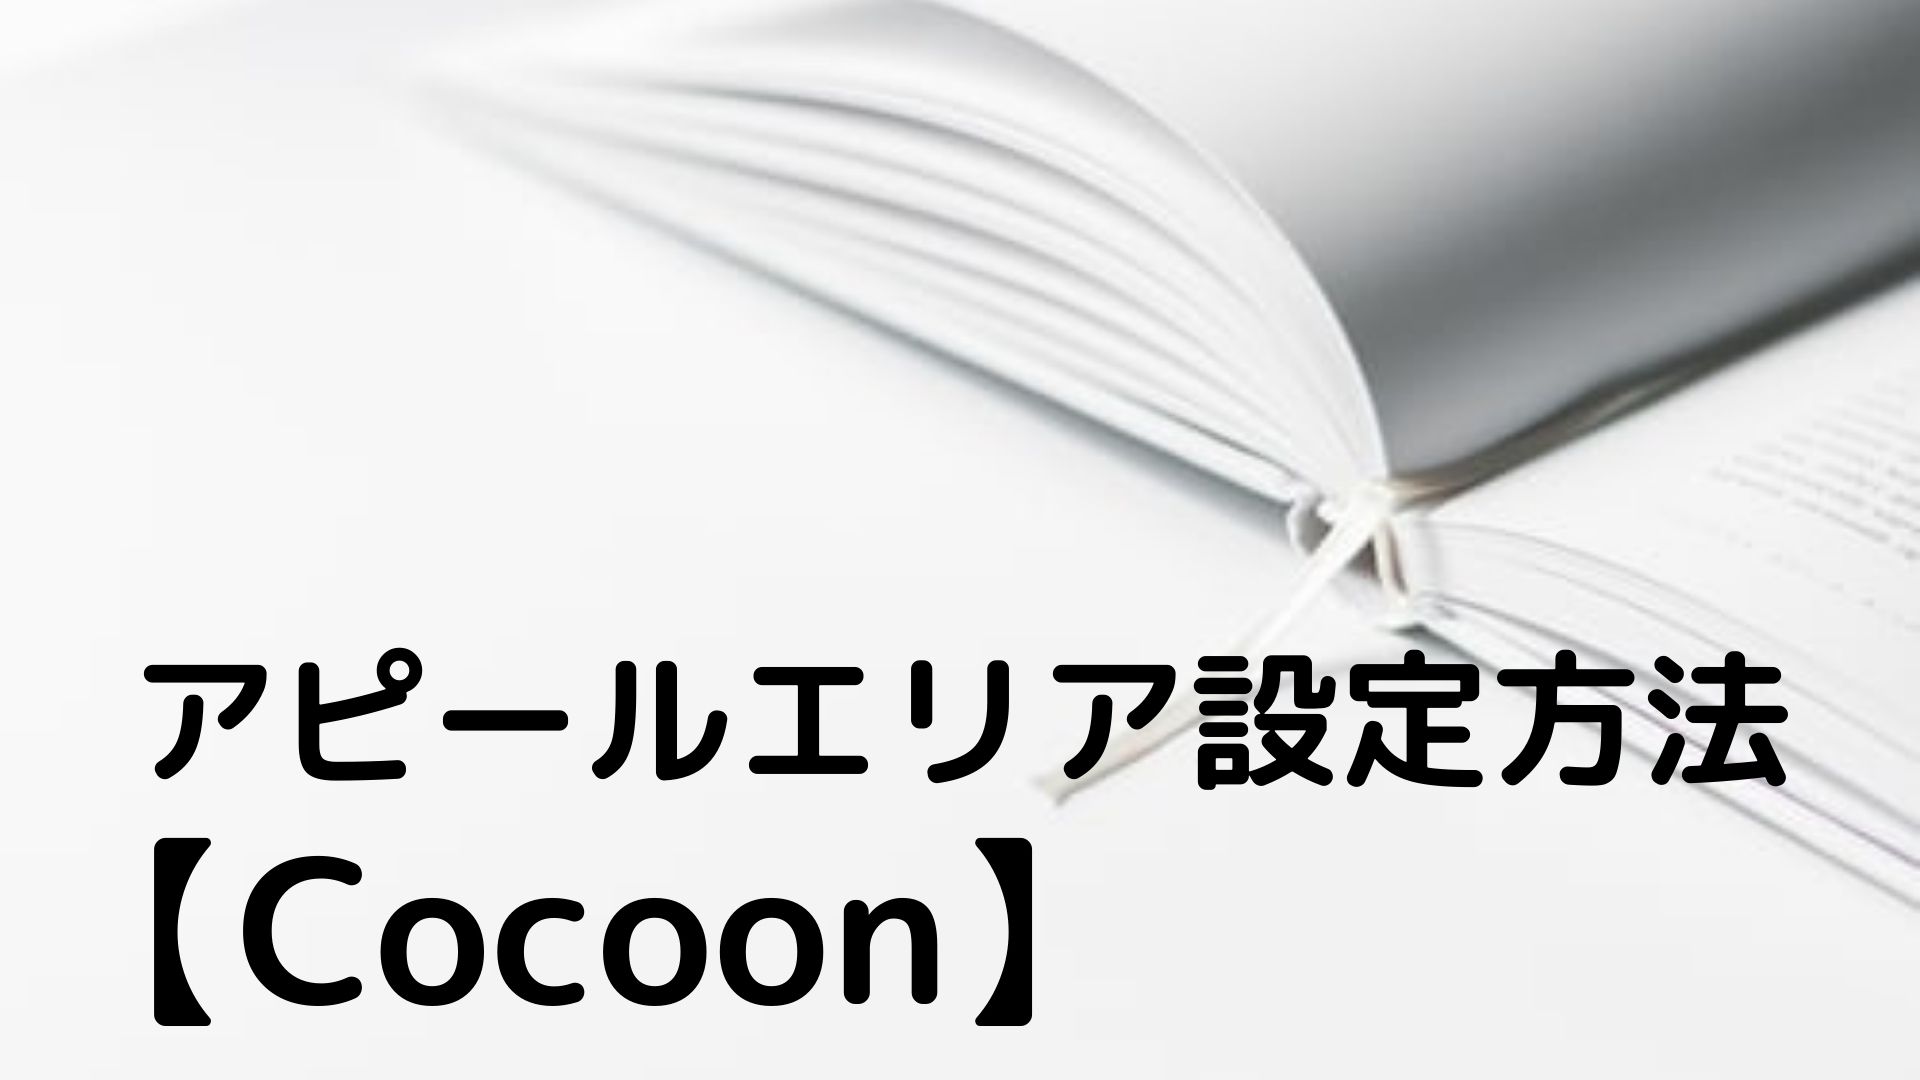 【Cocoon】 アピールエリア設定方法